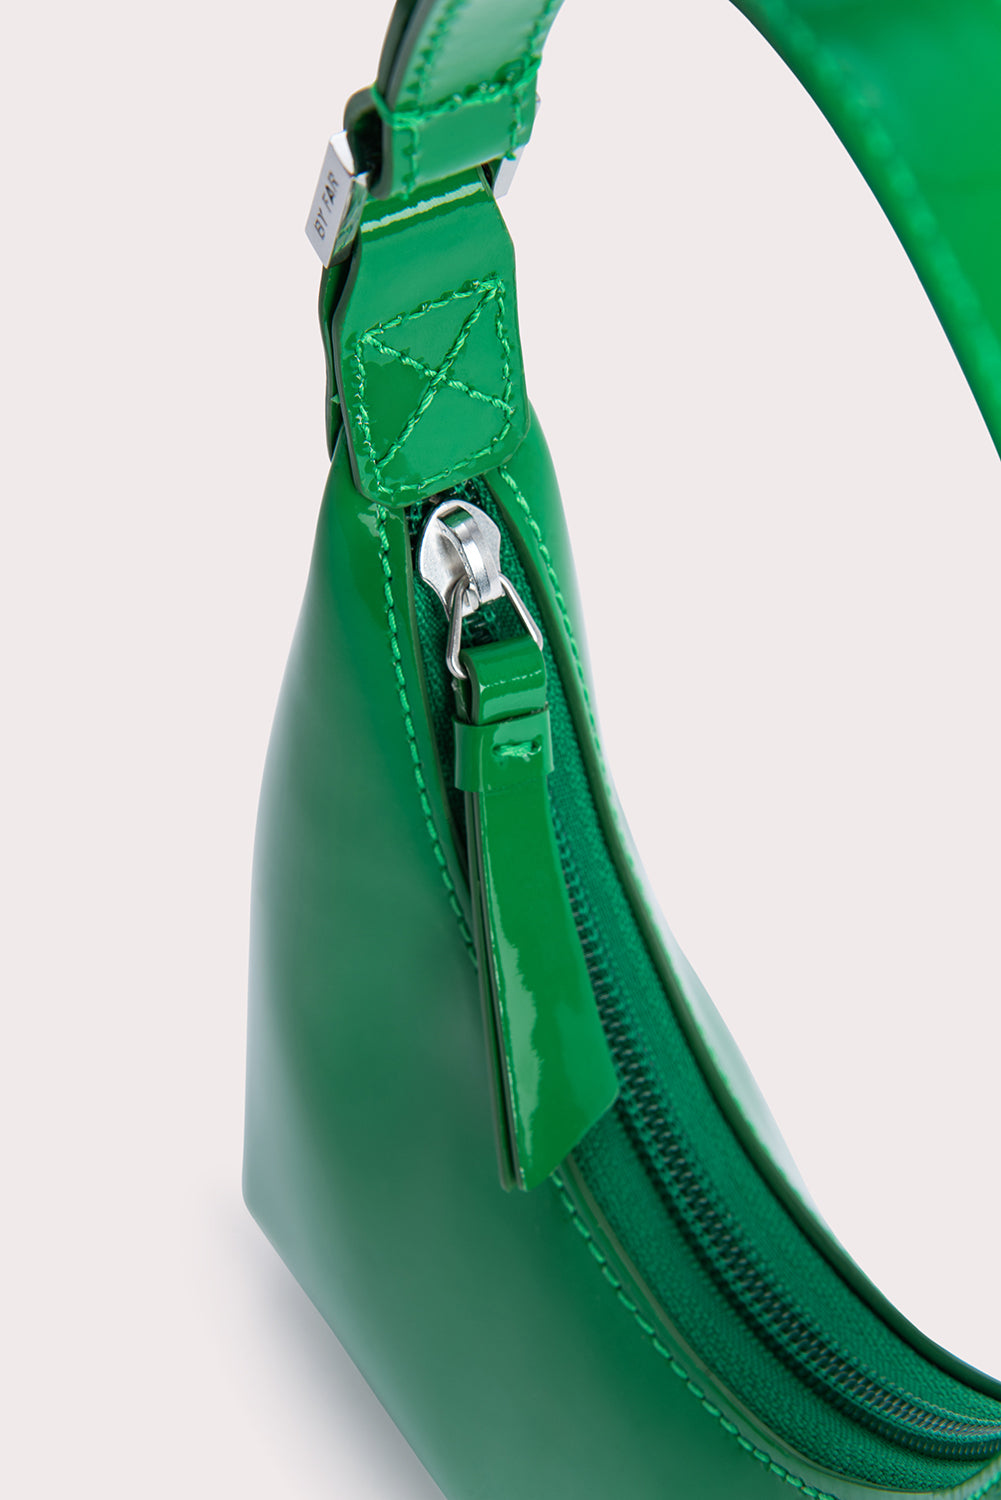 BY FAR Mini Semi Patent Bag - Lime Green